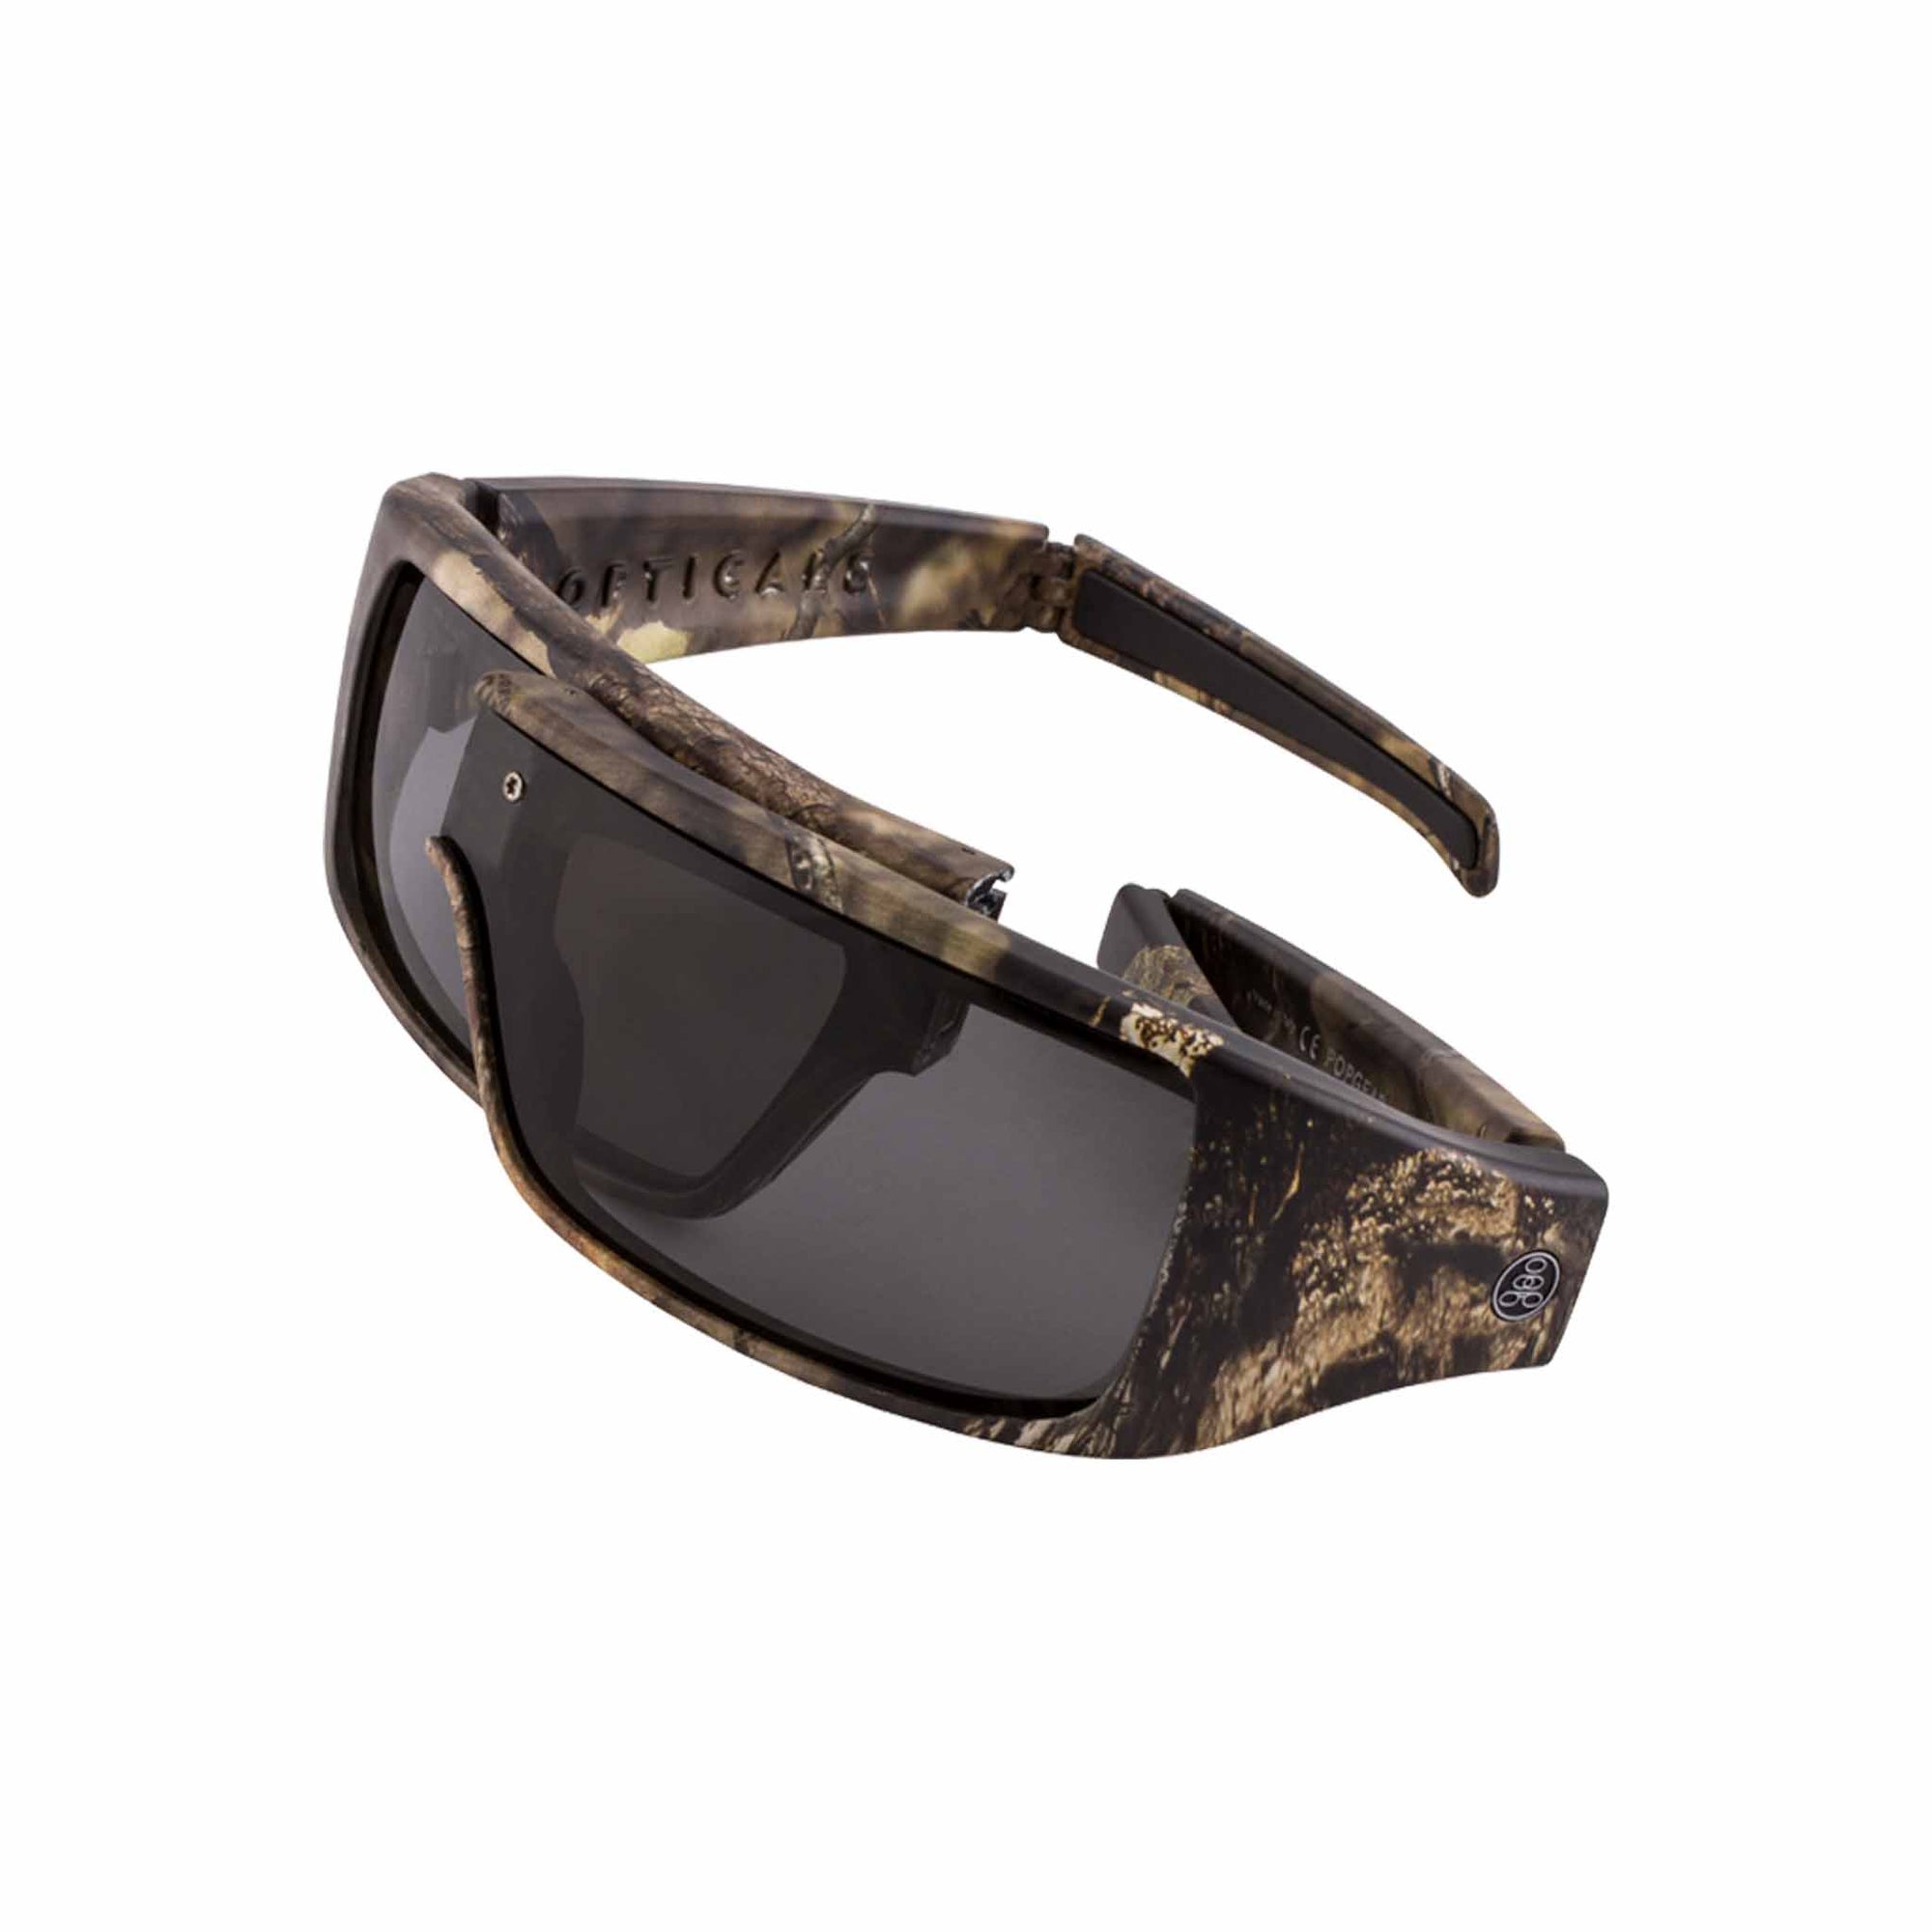 Popticals, Premium Compact Sunglasses, PopGear, 050050-MCGP, Polarized Sunglasses, Matte Mossy Oak Break-Up Frame , Gray Lenses, Spider View